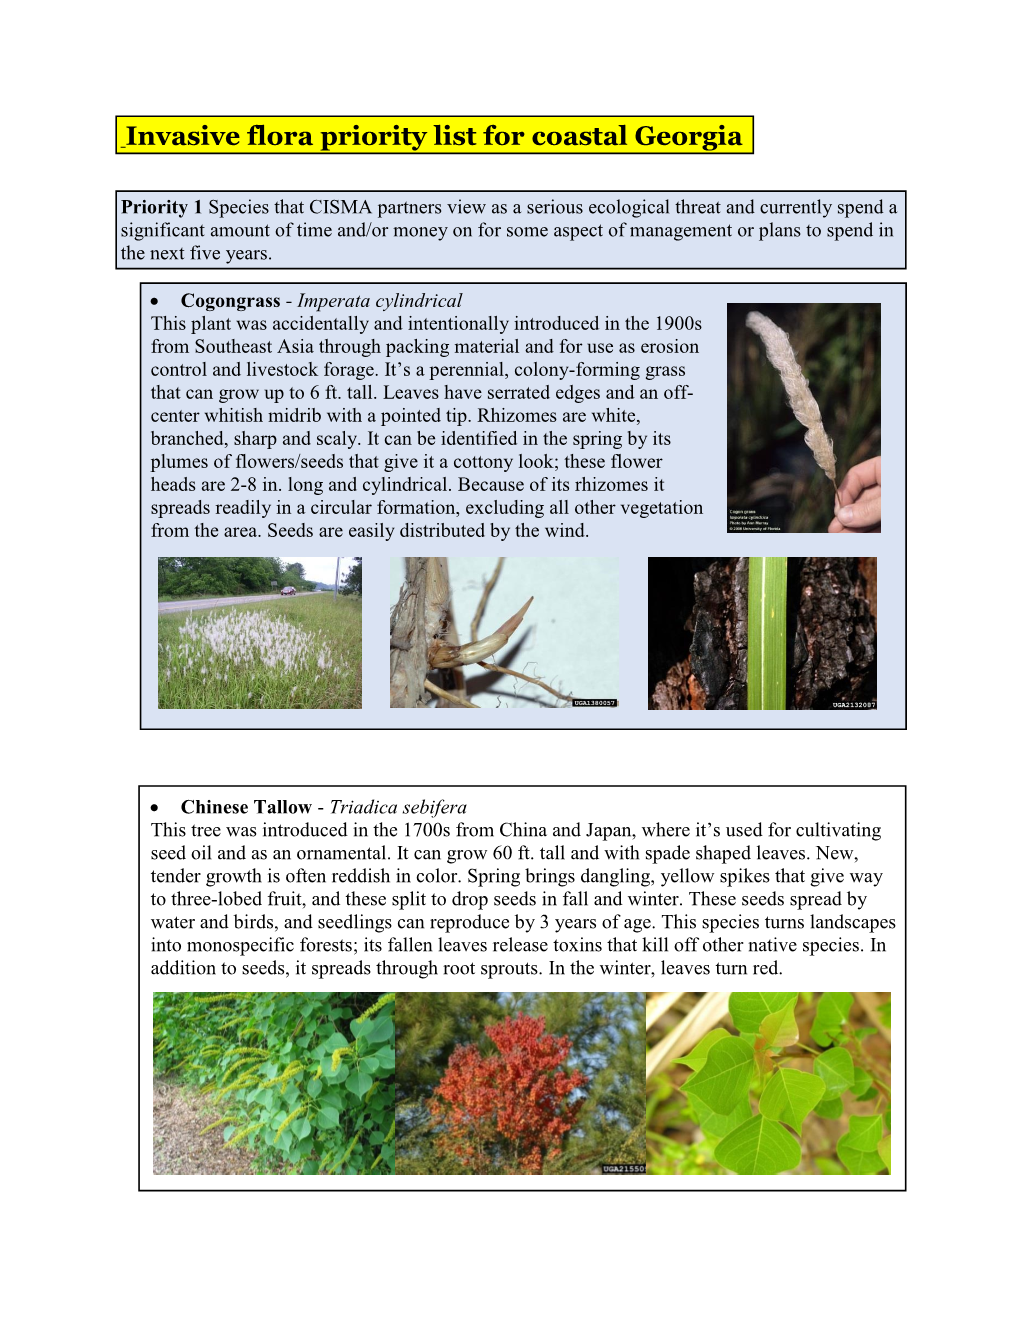 Invasive Flora Priority List for Coastal Georgia